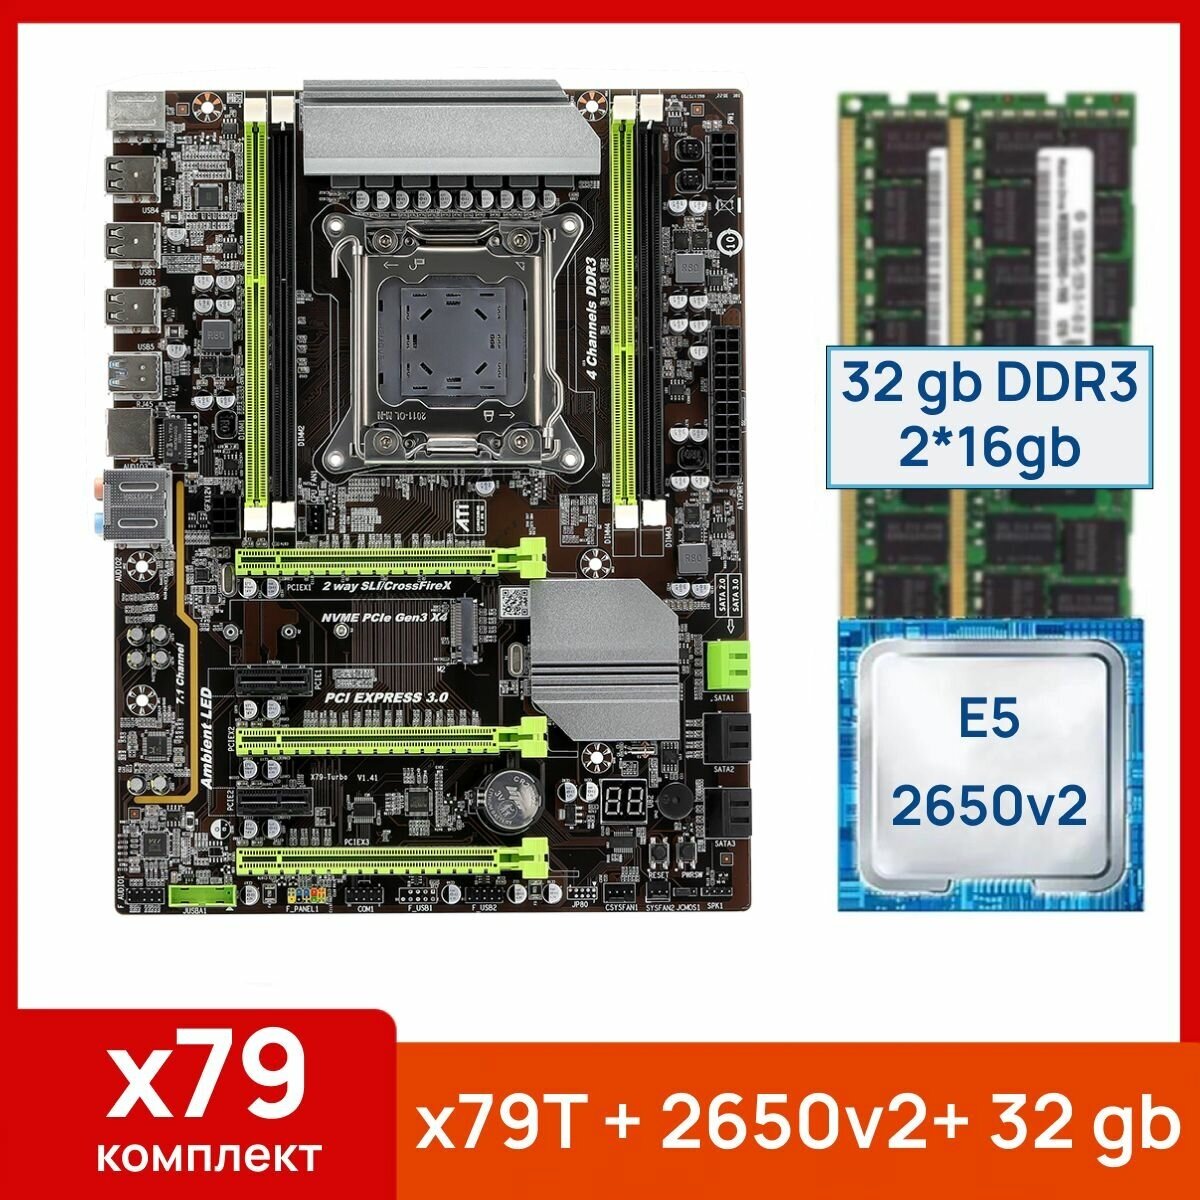 Комплект: Atermiter x79-Turbo + Xeon E5 2650v2 + 32 gb(2x16gb) DDR3 ecc reg